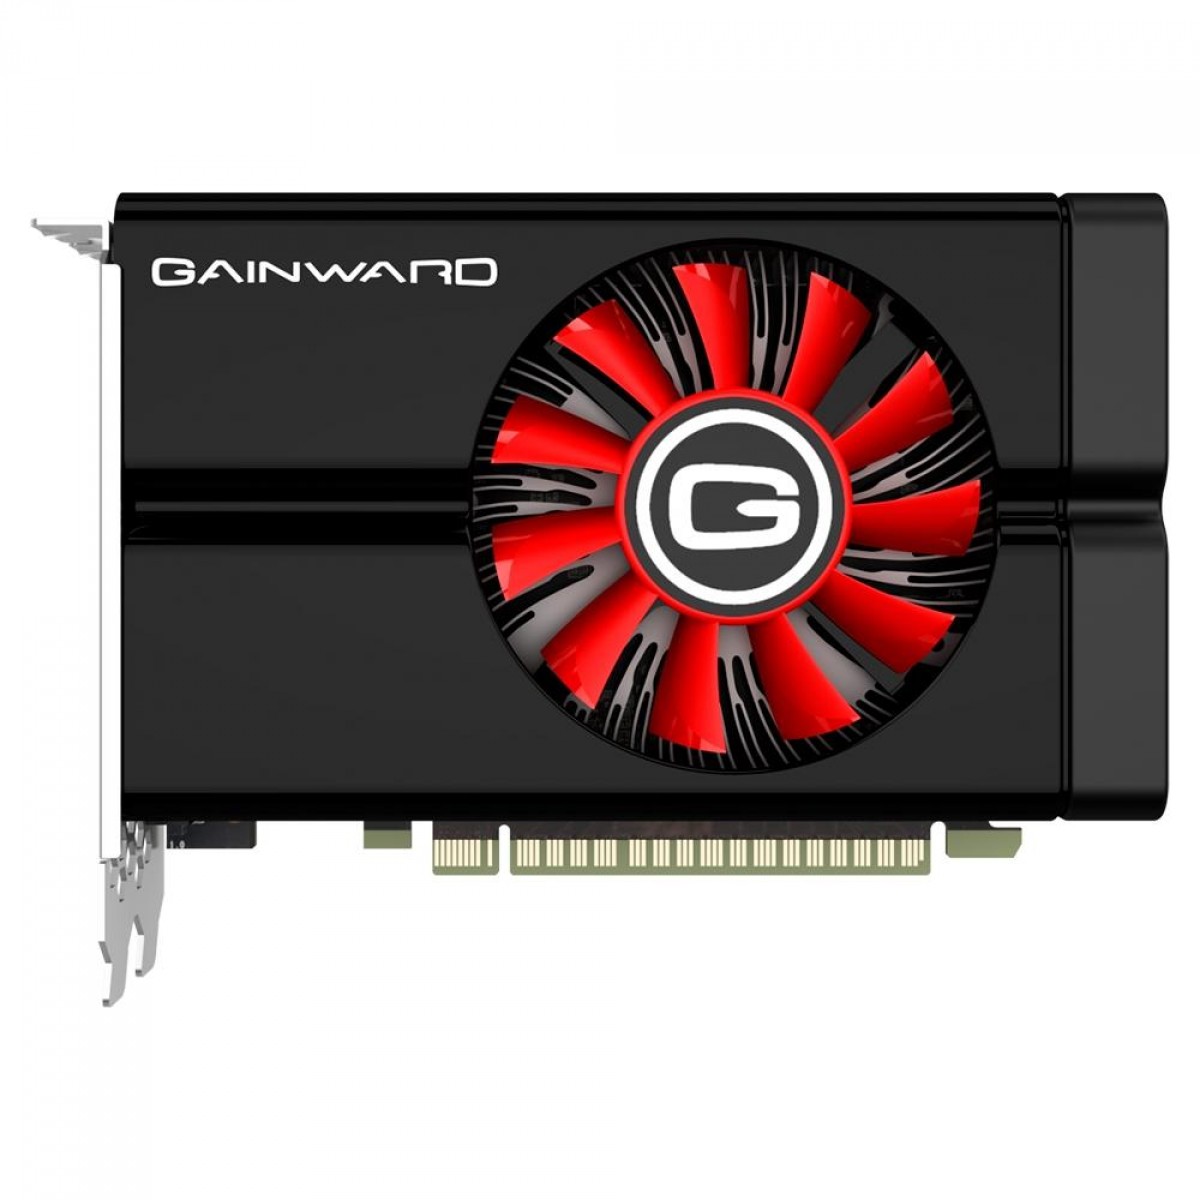 Placa de Vídeo Gainward NVIDIA GeForce GTX 1050 Ti, 4GB, GDDR5, 128bit, NE5105T018G1-1070F